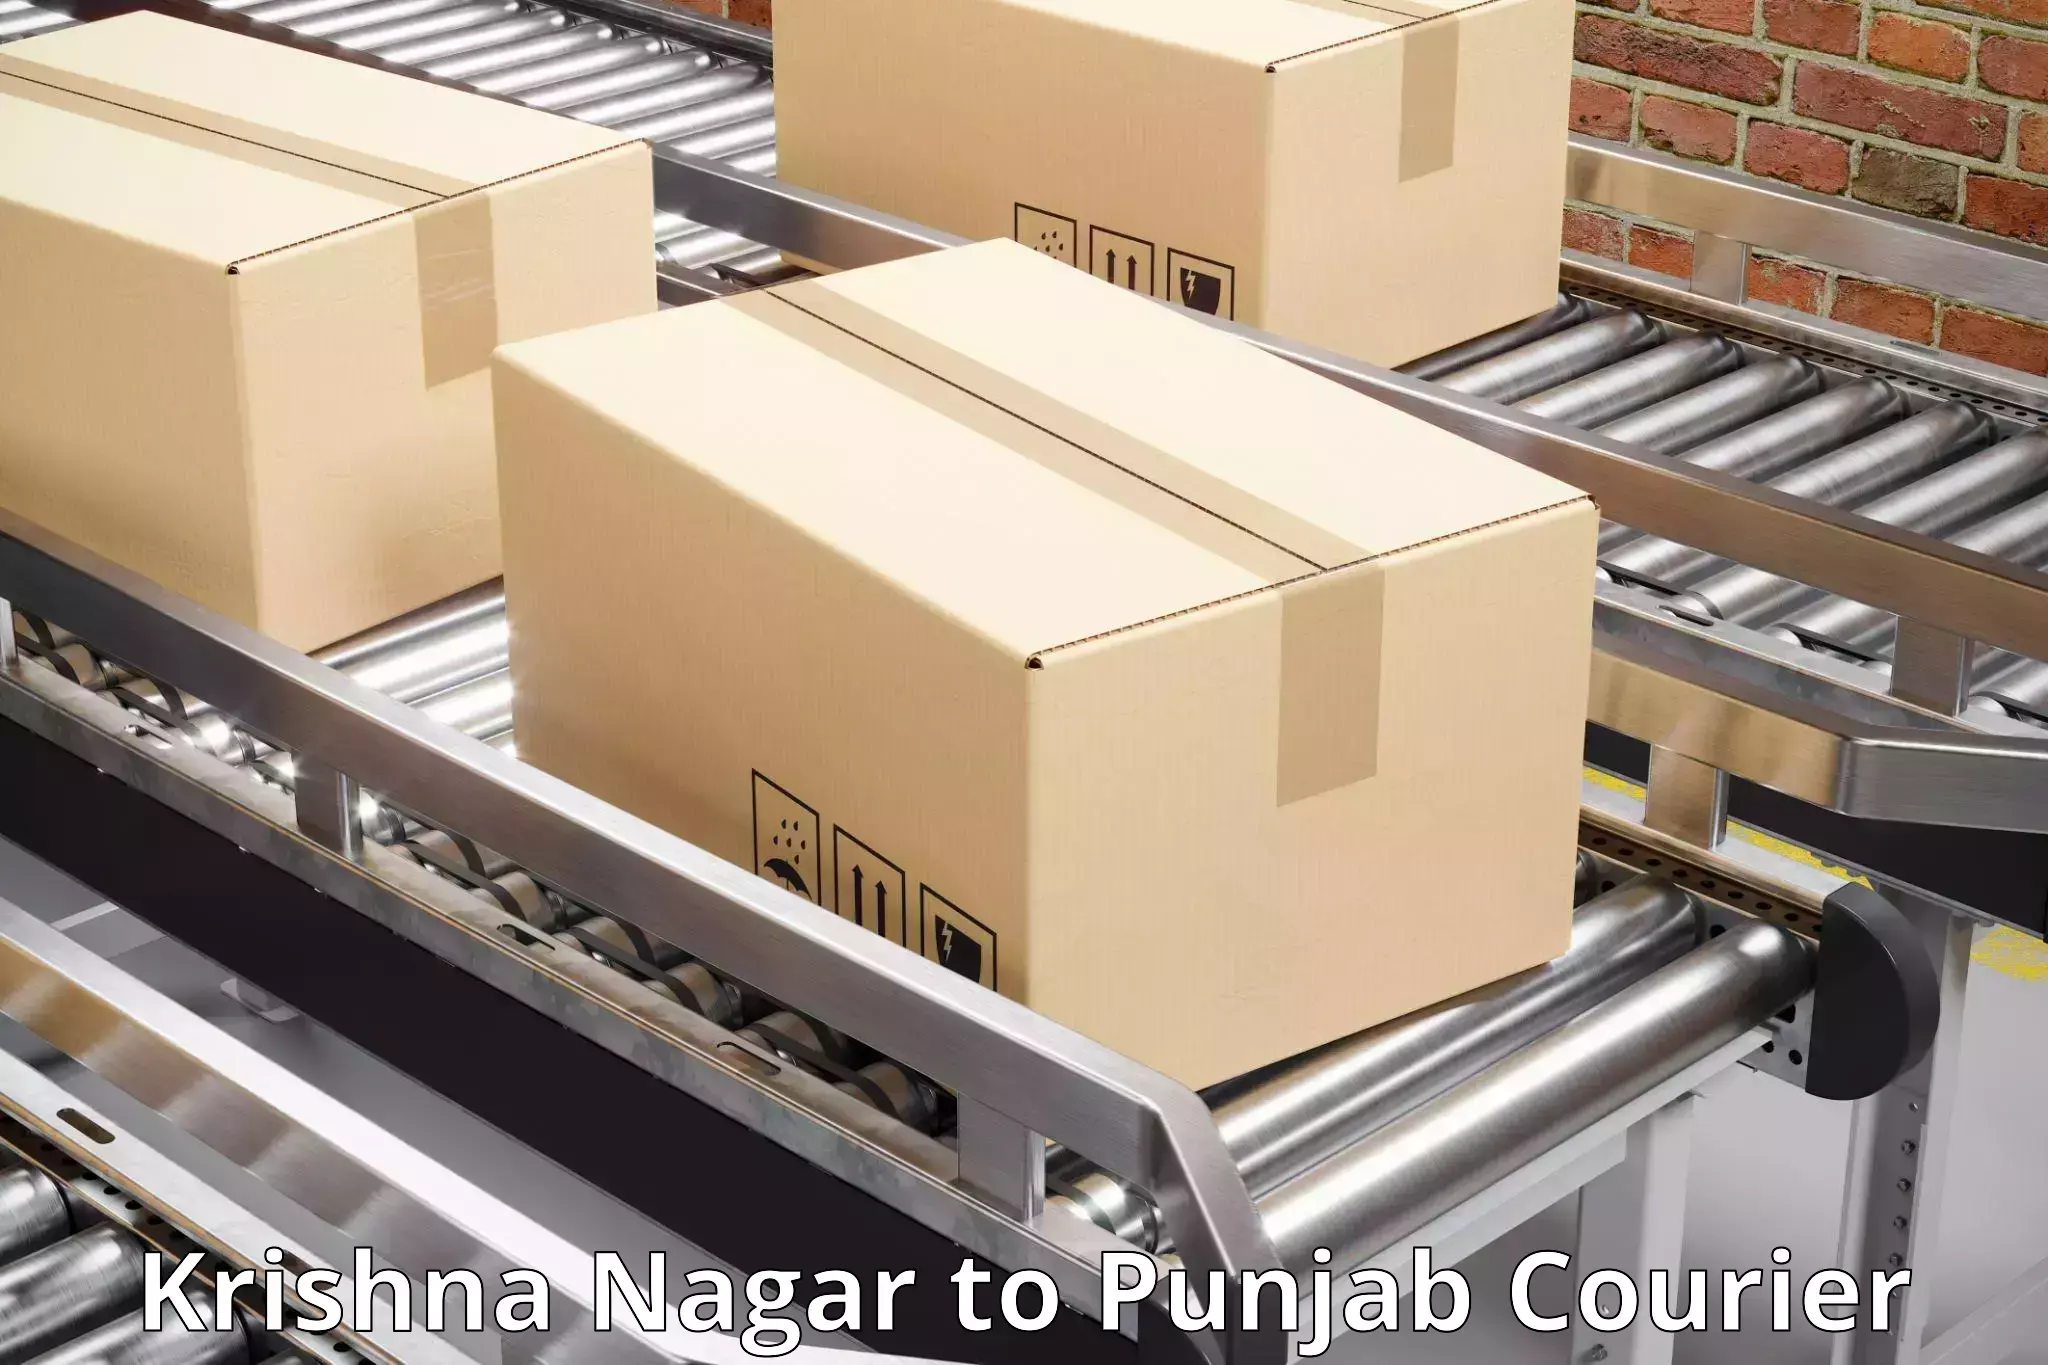 Courier rate comparison in Krishna Nagar to Punjab